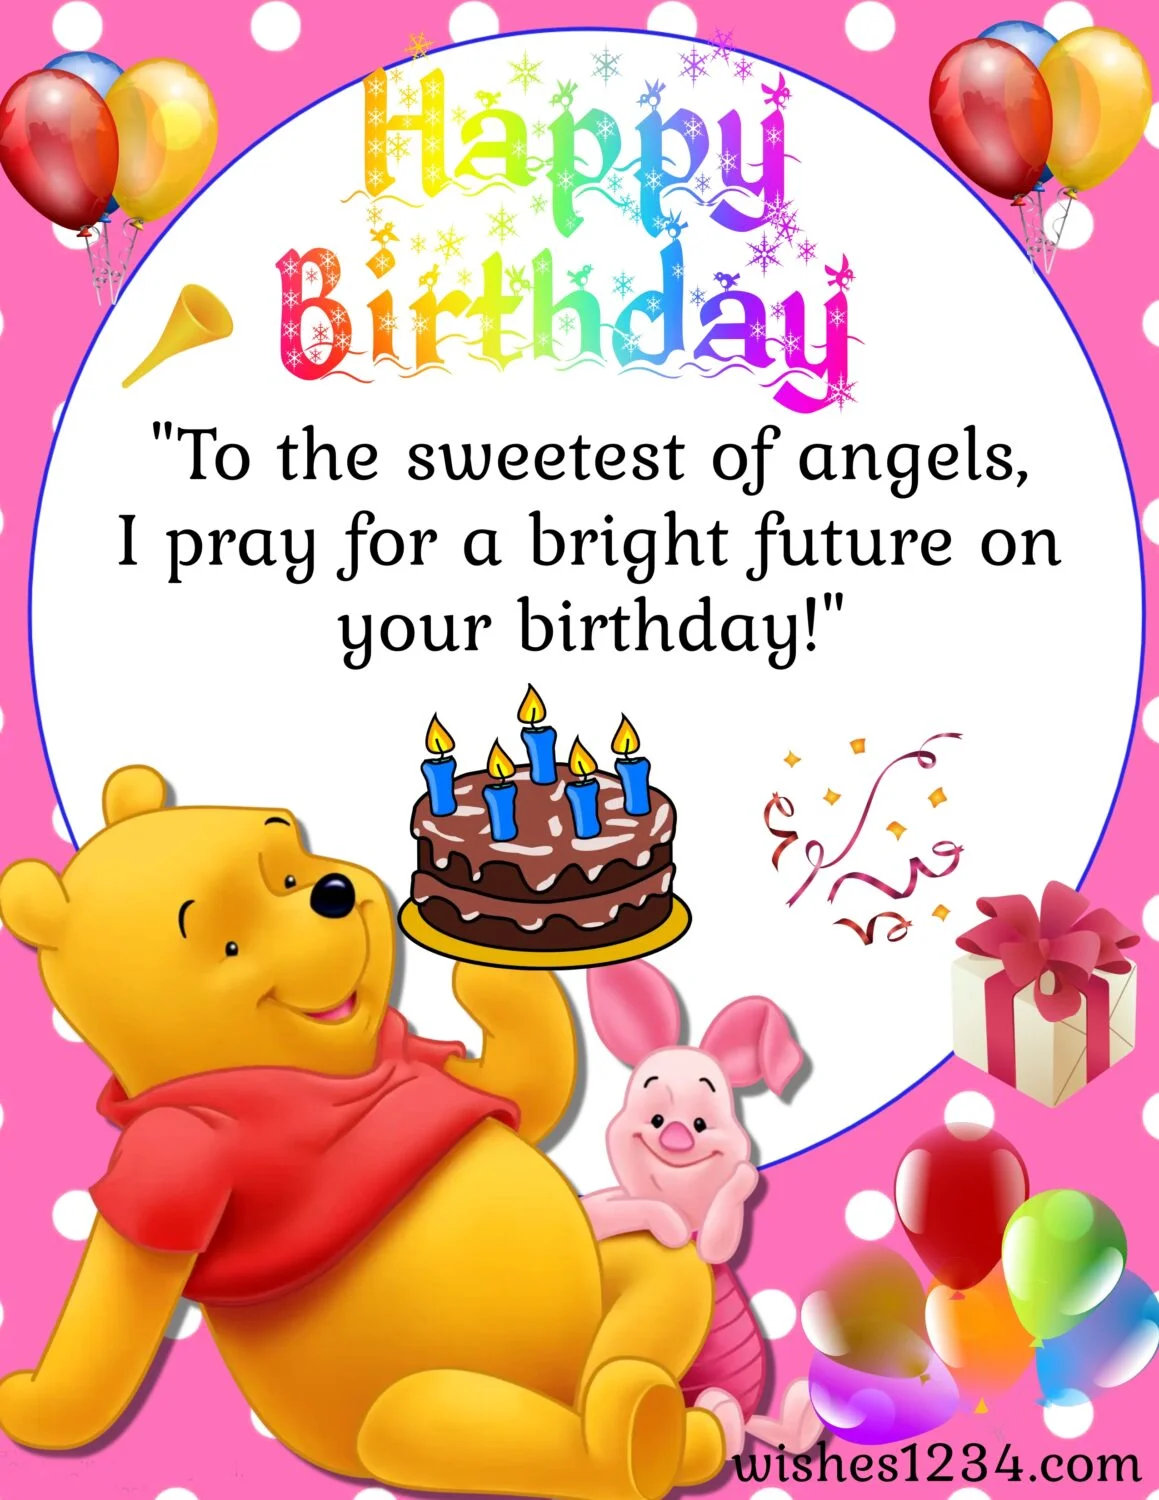 Winnie the pooh with friends, Kids birthday | Happy Birthday wishes for kids.